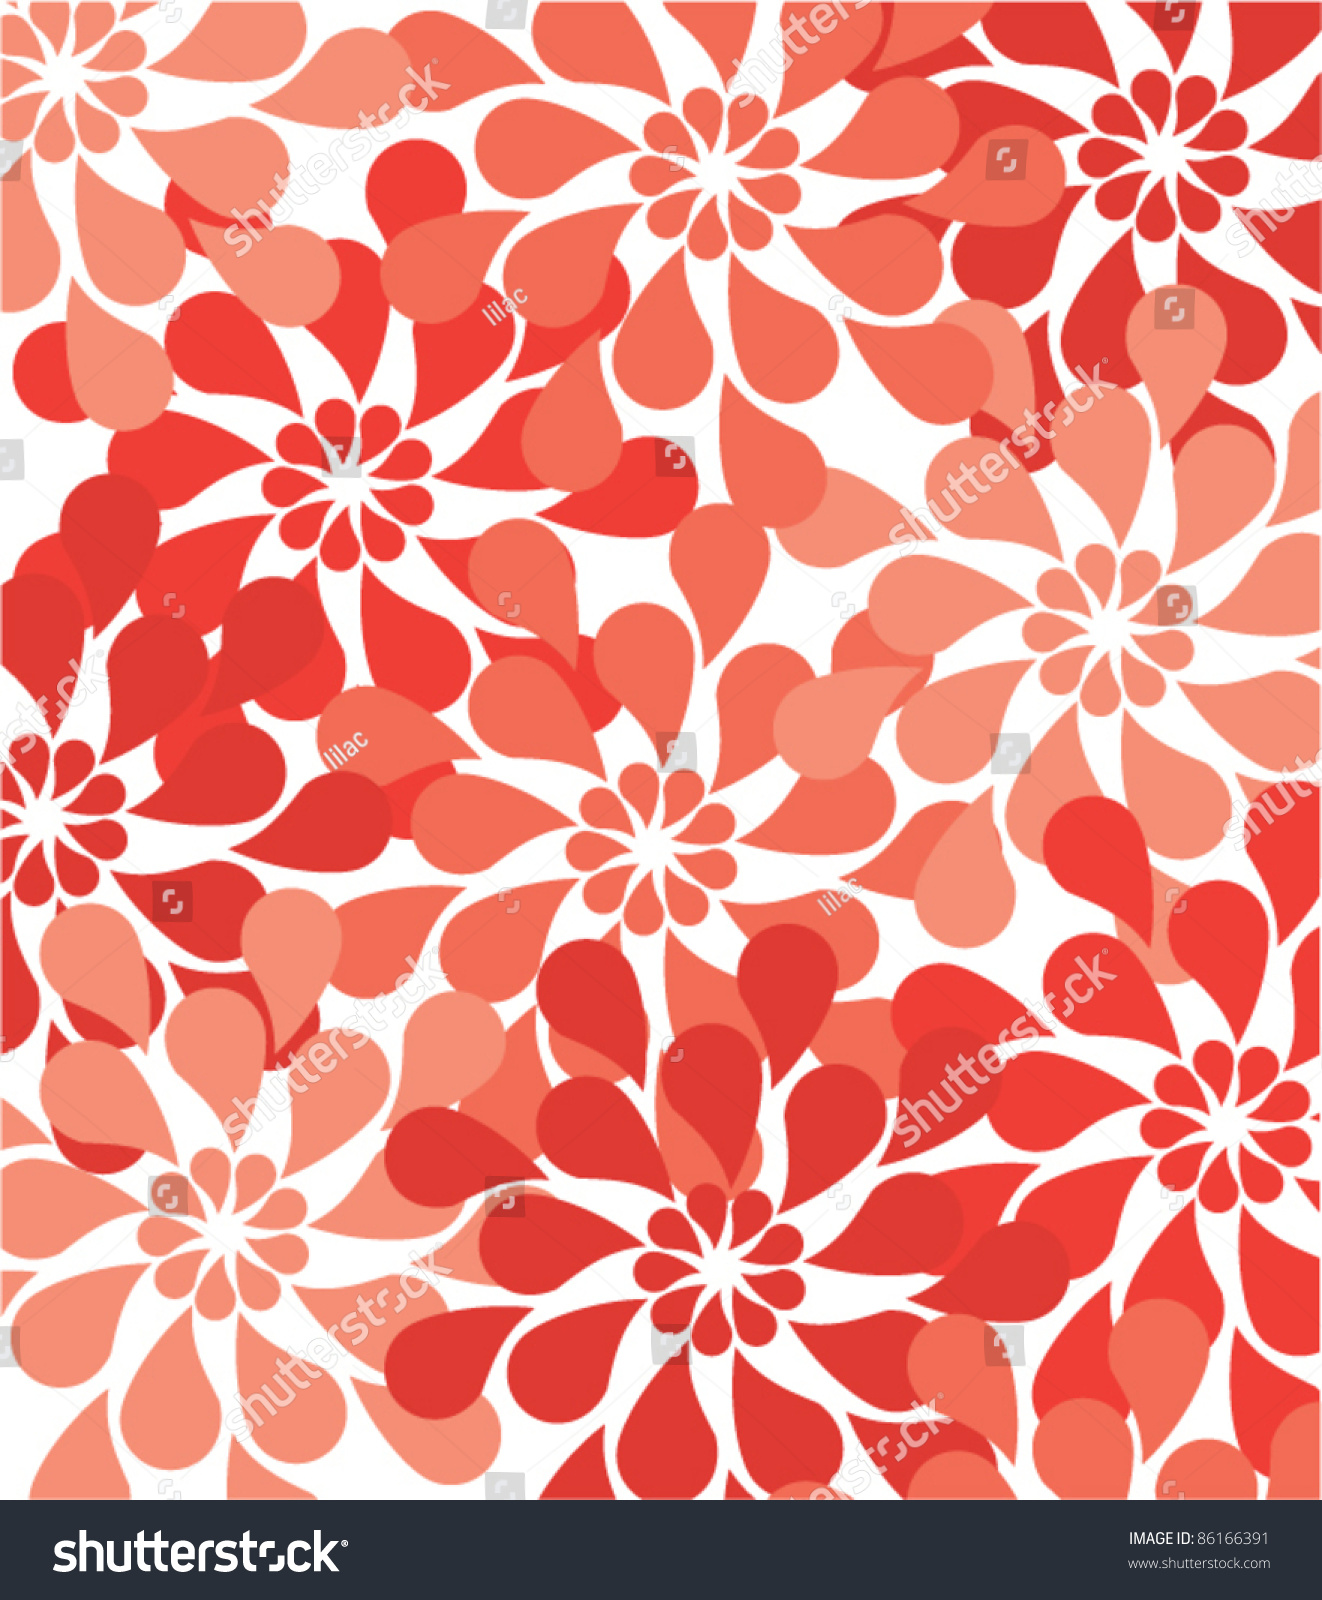 Vector Floral Background - 86166391 : Shutterstock